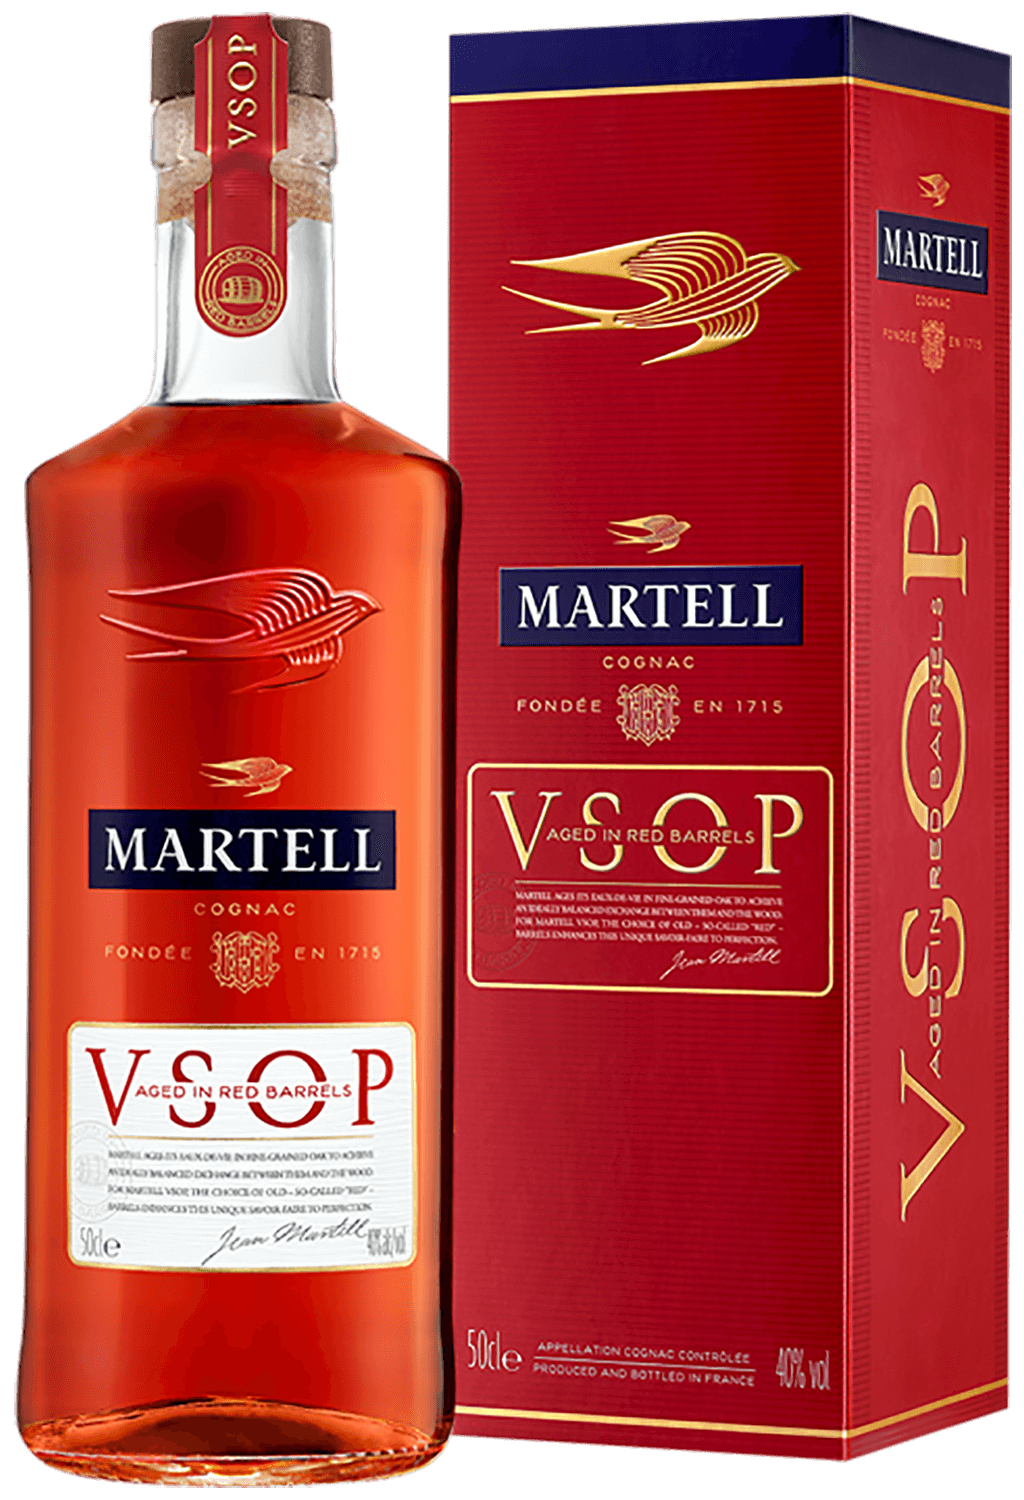 Martell VSOP Aged in Red Barrels (gift box) martell vsop aged in red barrels gift box